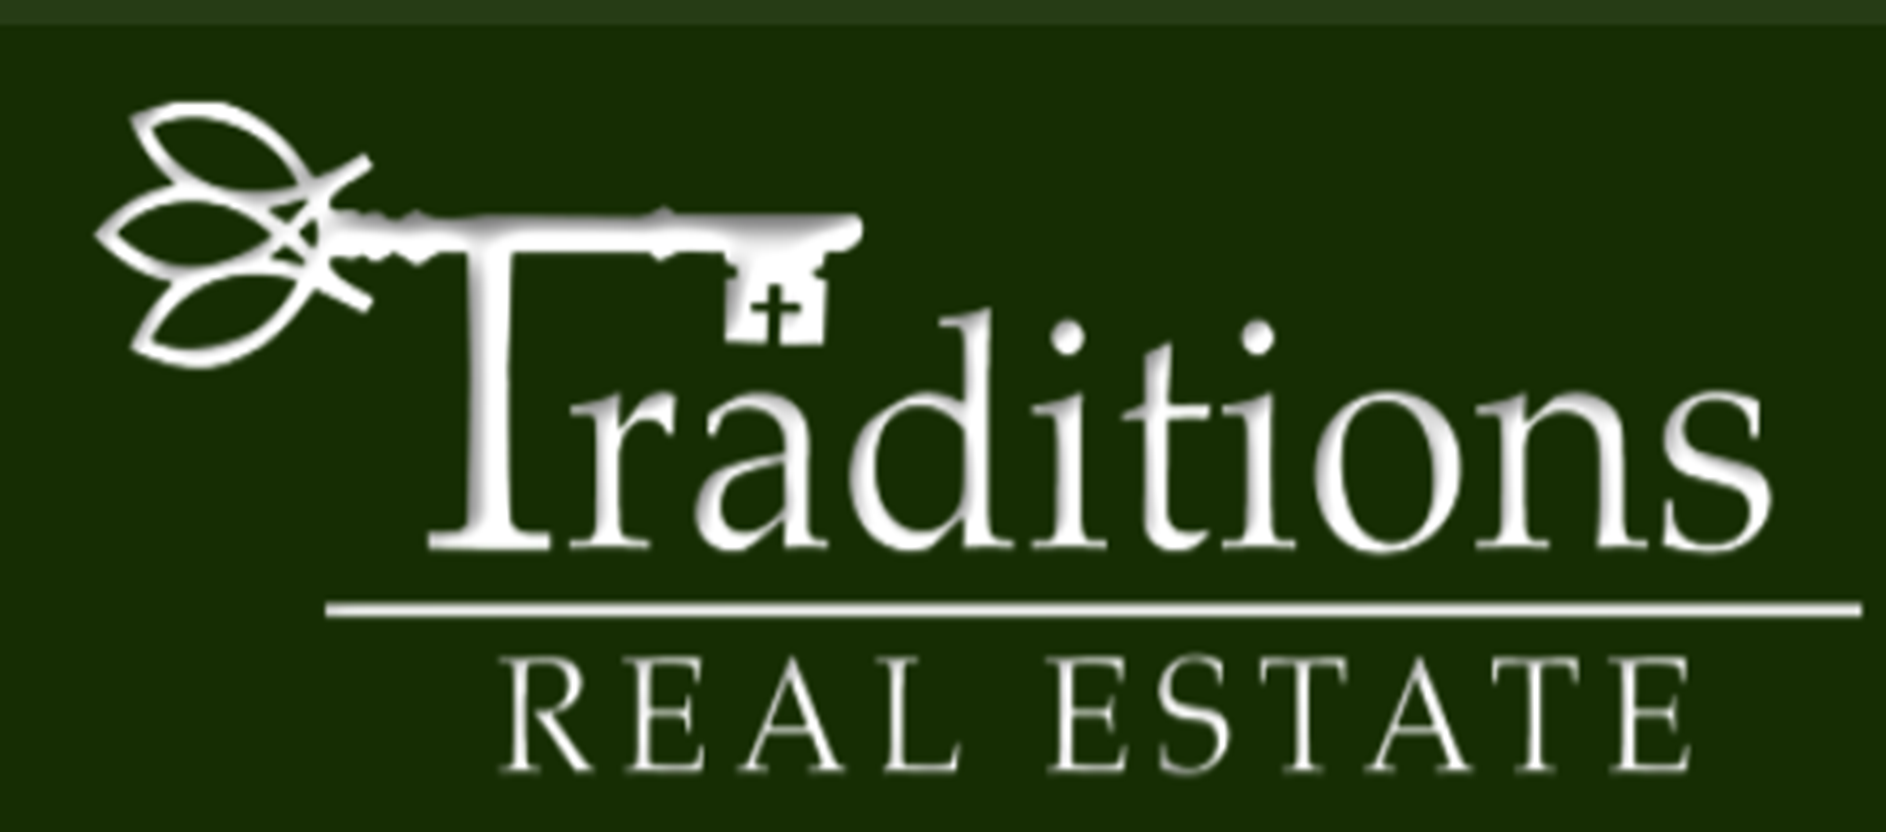 Traditions Real Estate LLC logo